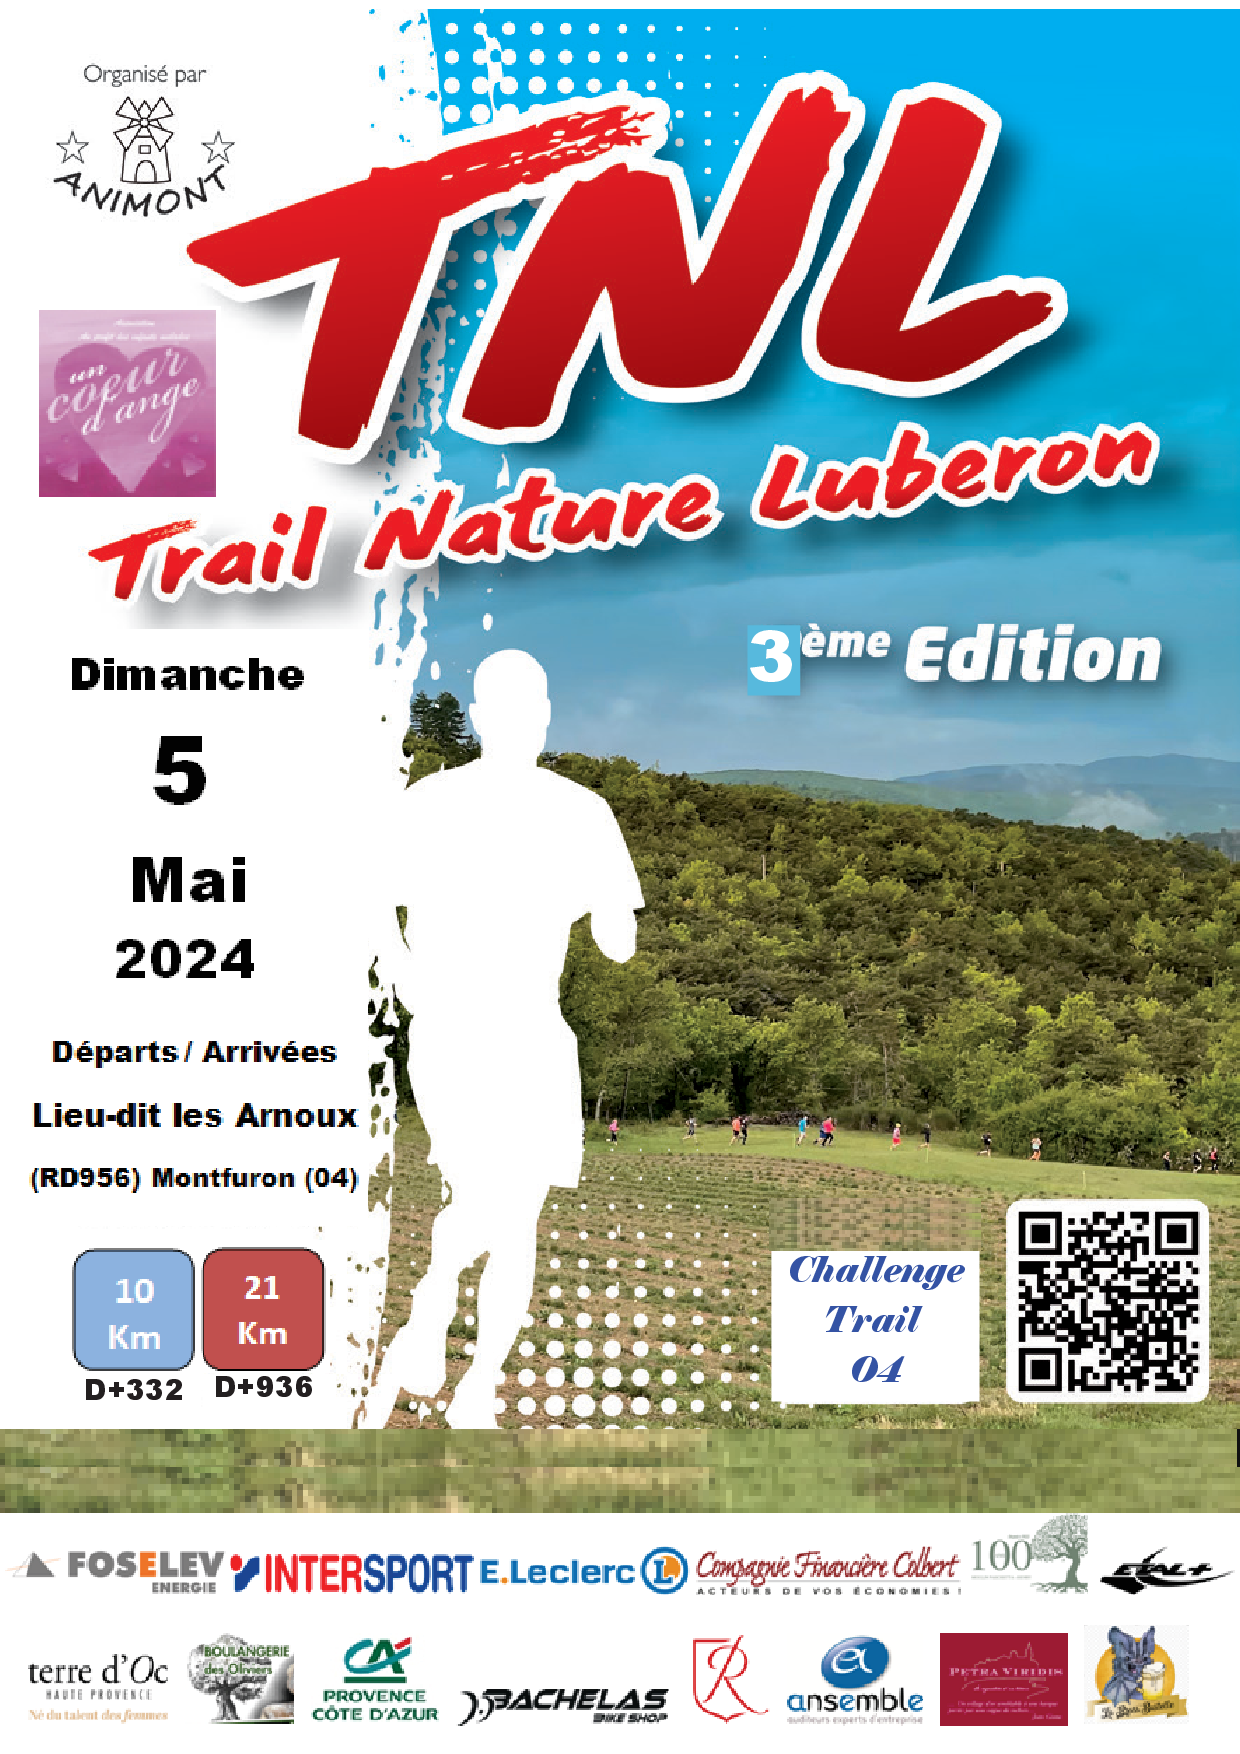 TNL -Trail Nature Luberon 3ème Edition